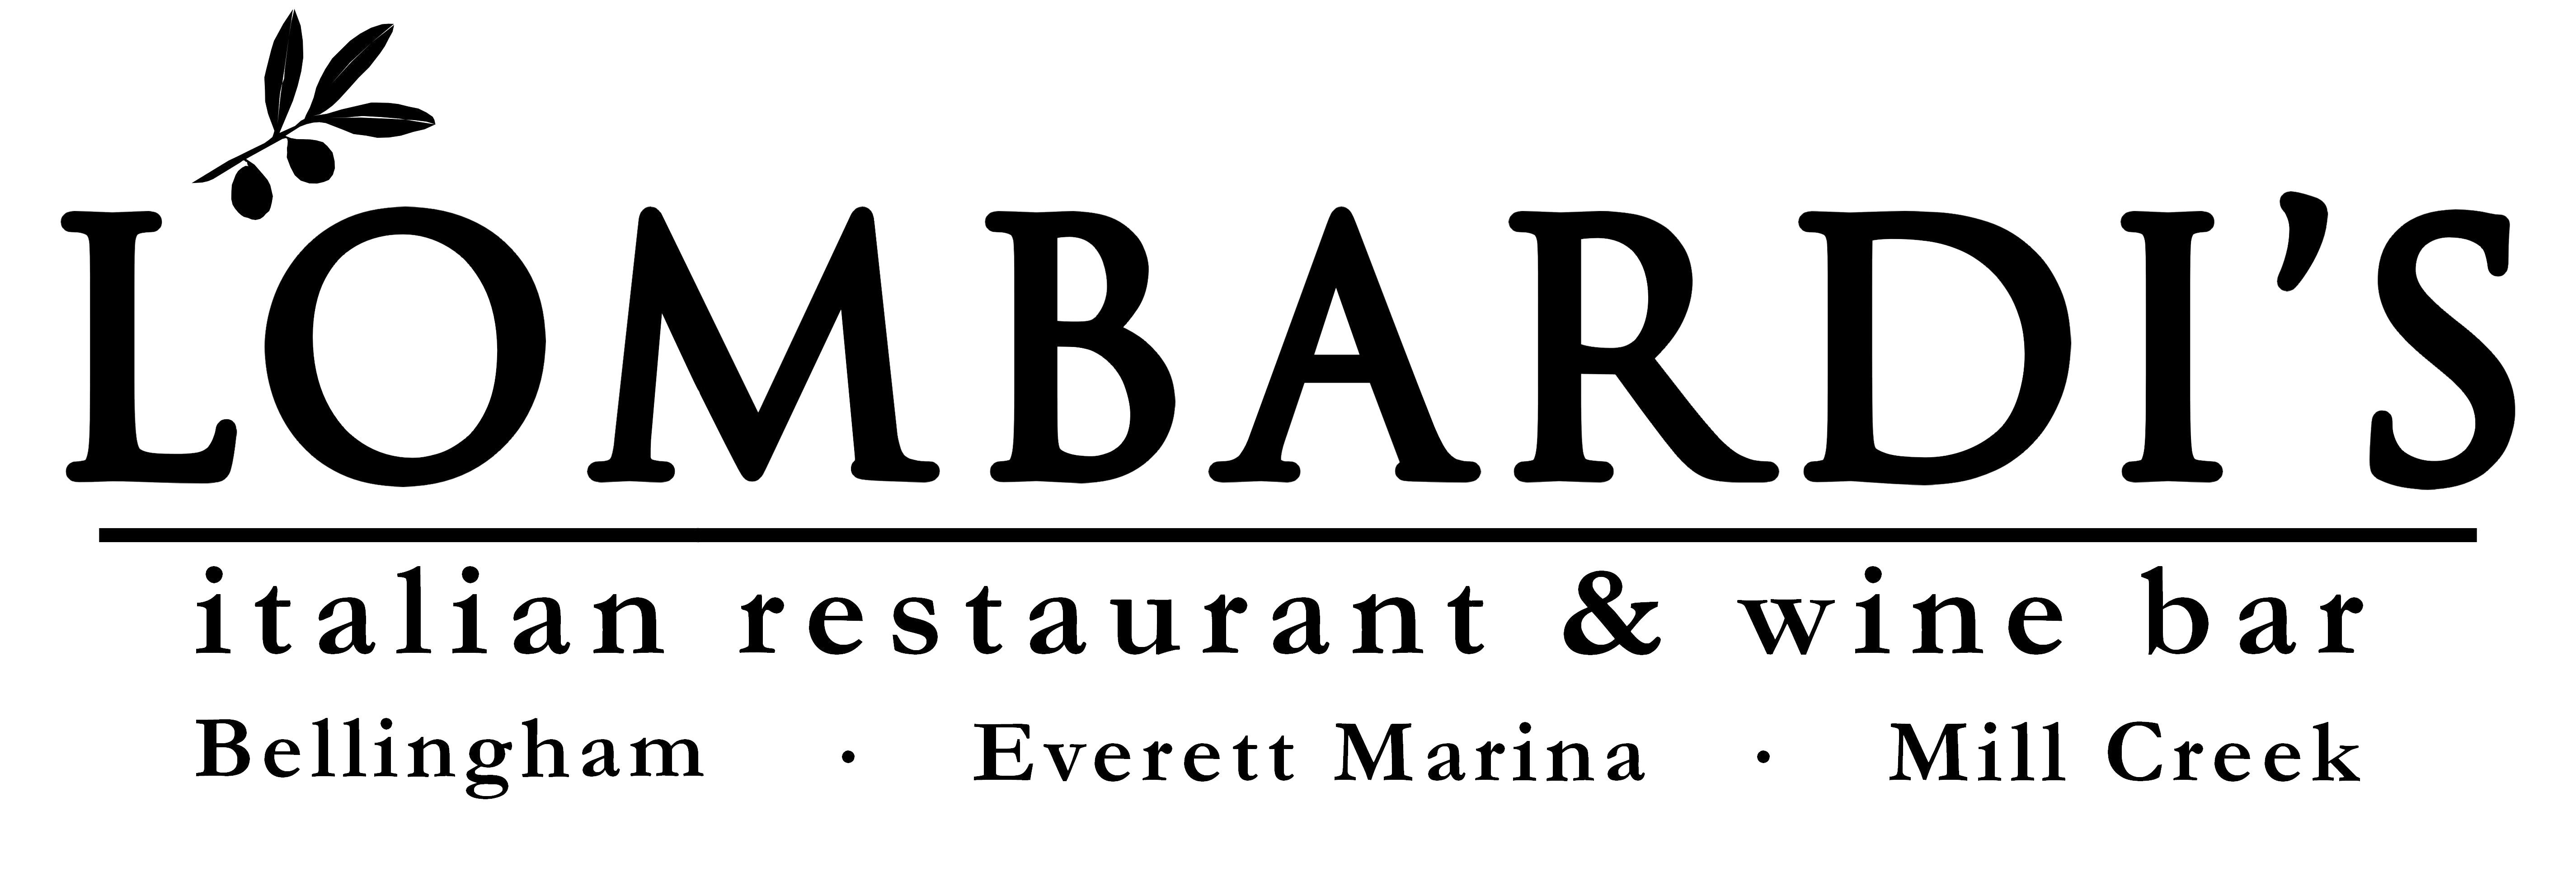 Lombardi's Italian Restaurant & Wine Bar